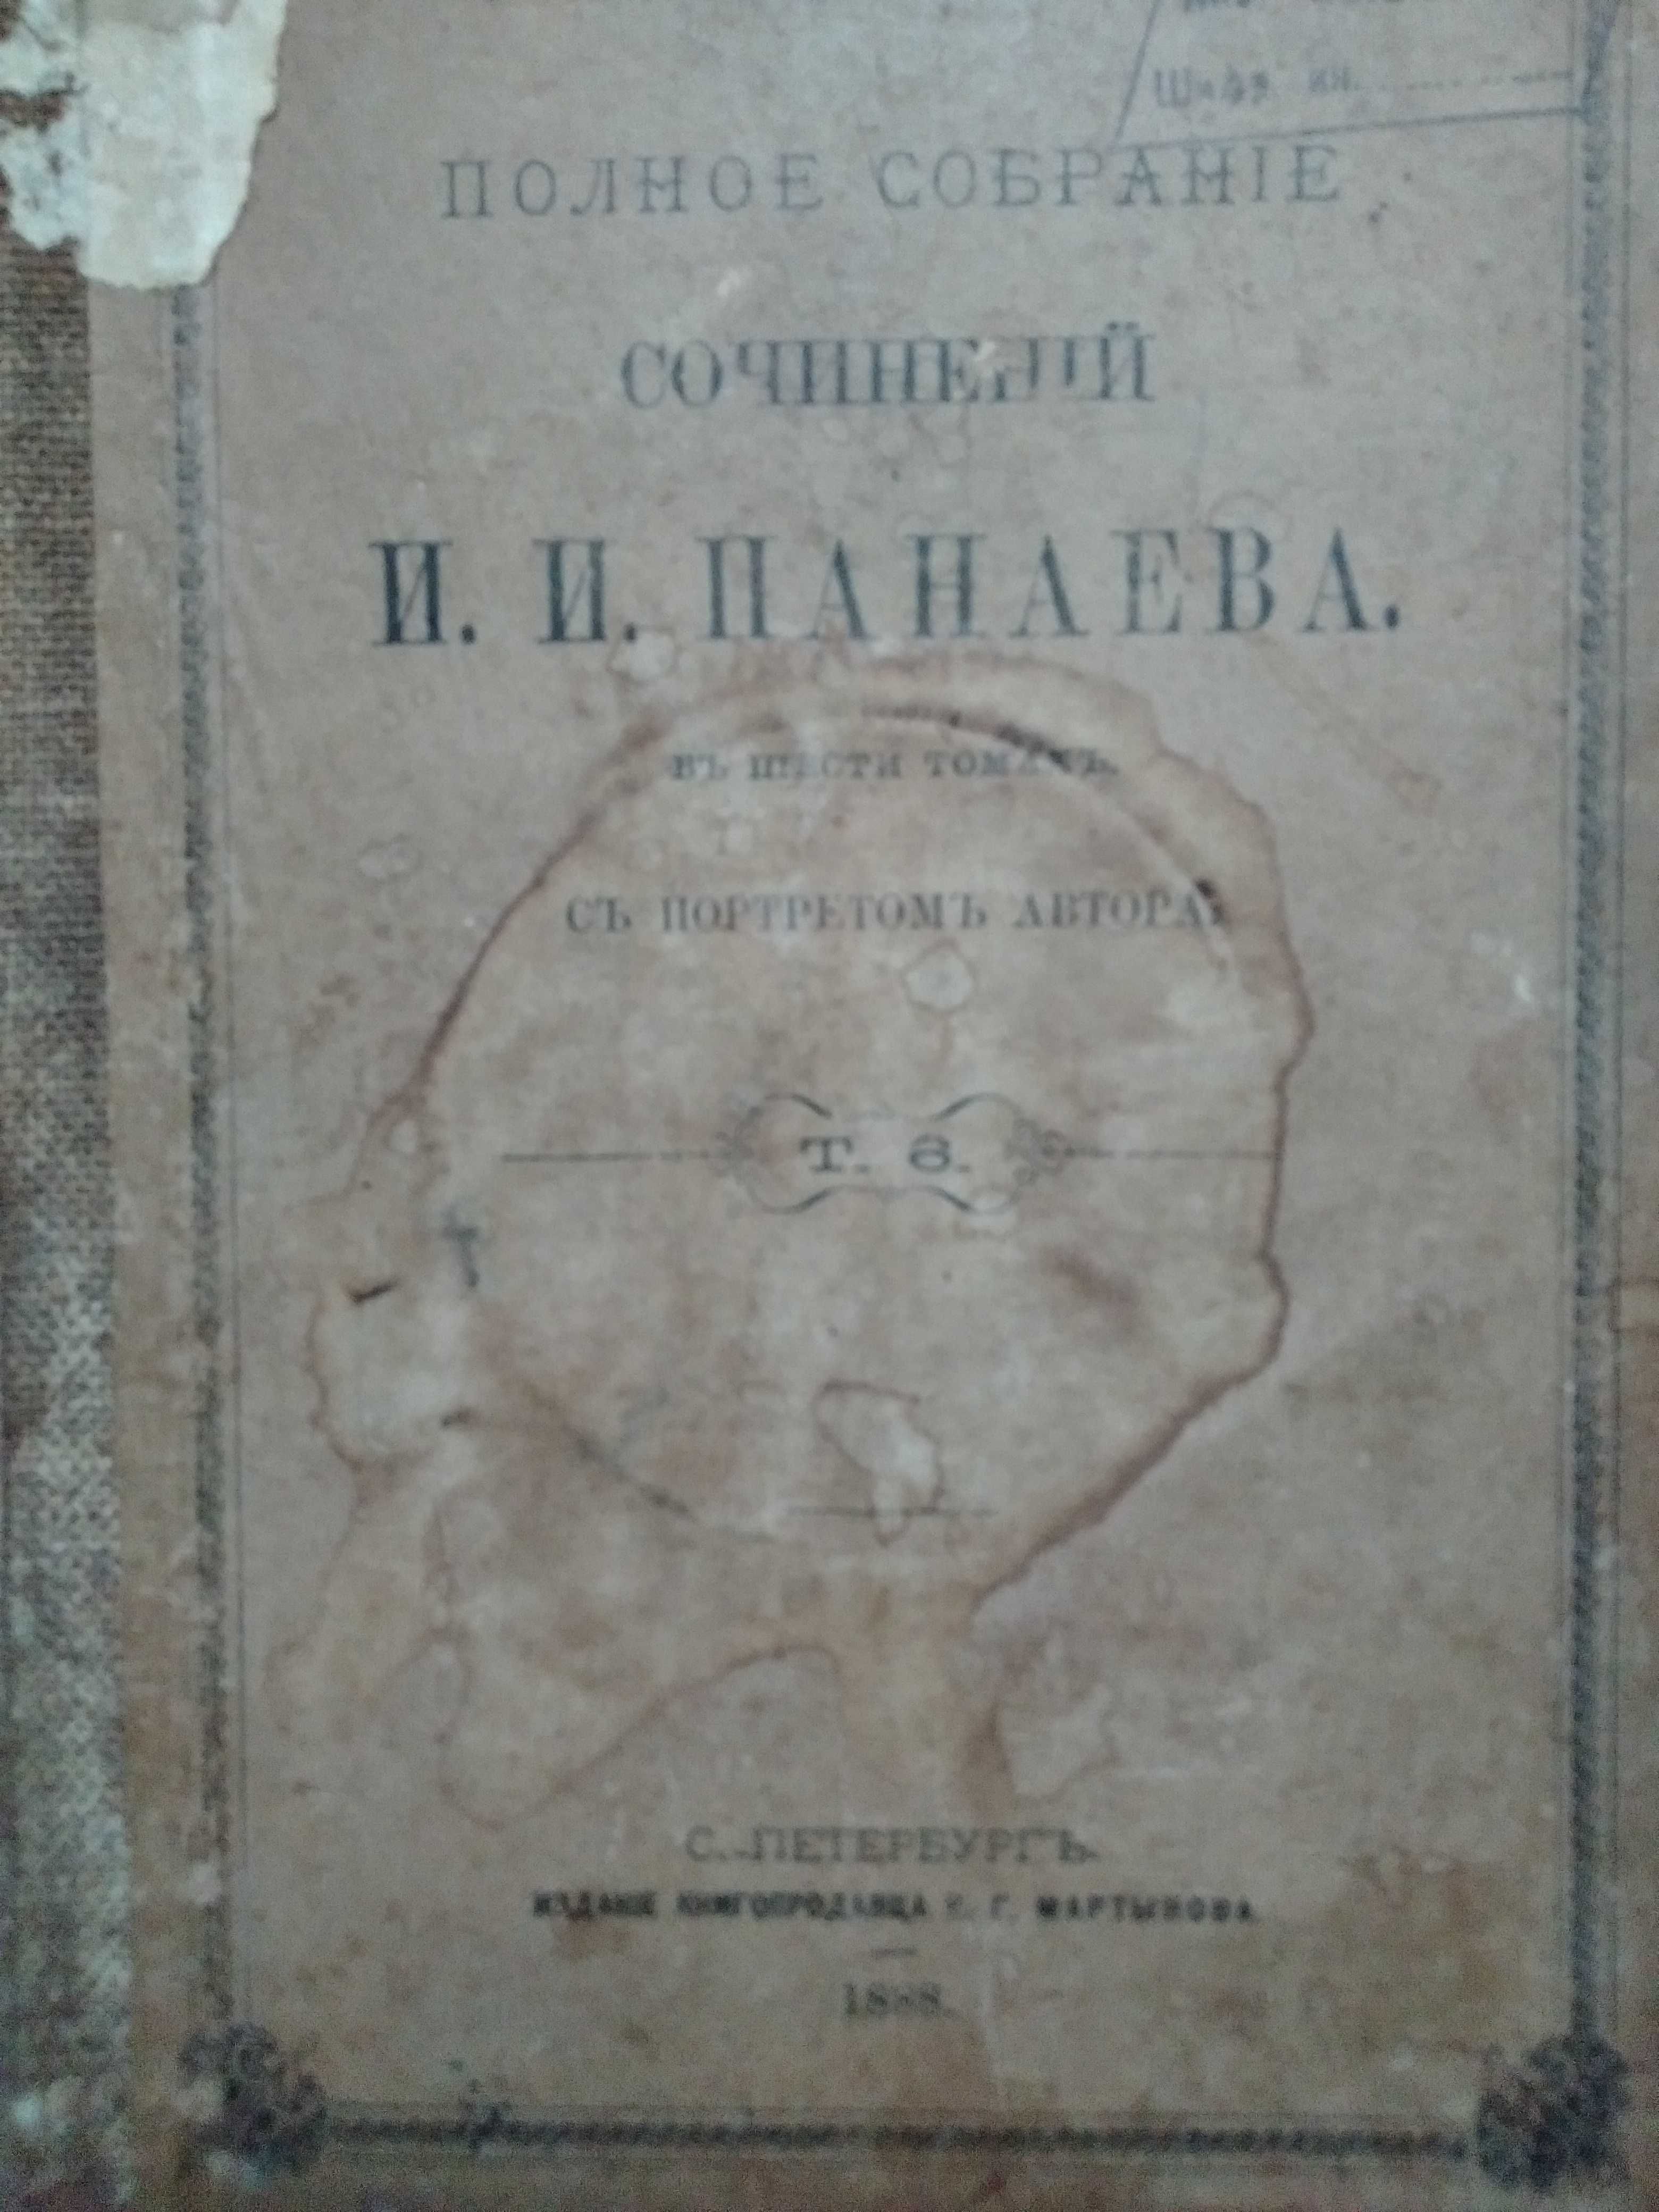 Старая книга " Полное собрание сочинений И.И. Панаева" - 1888 г.в.